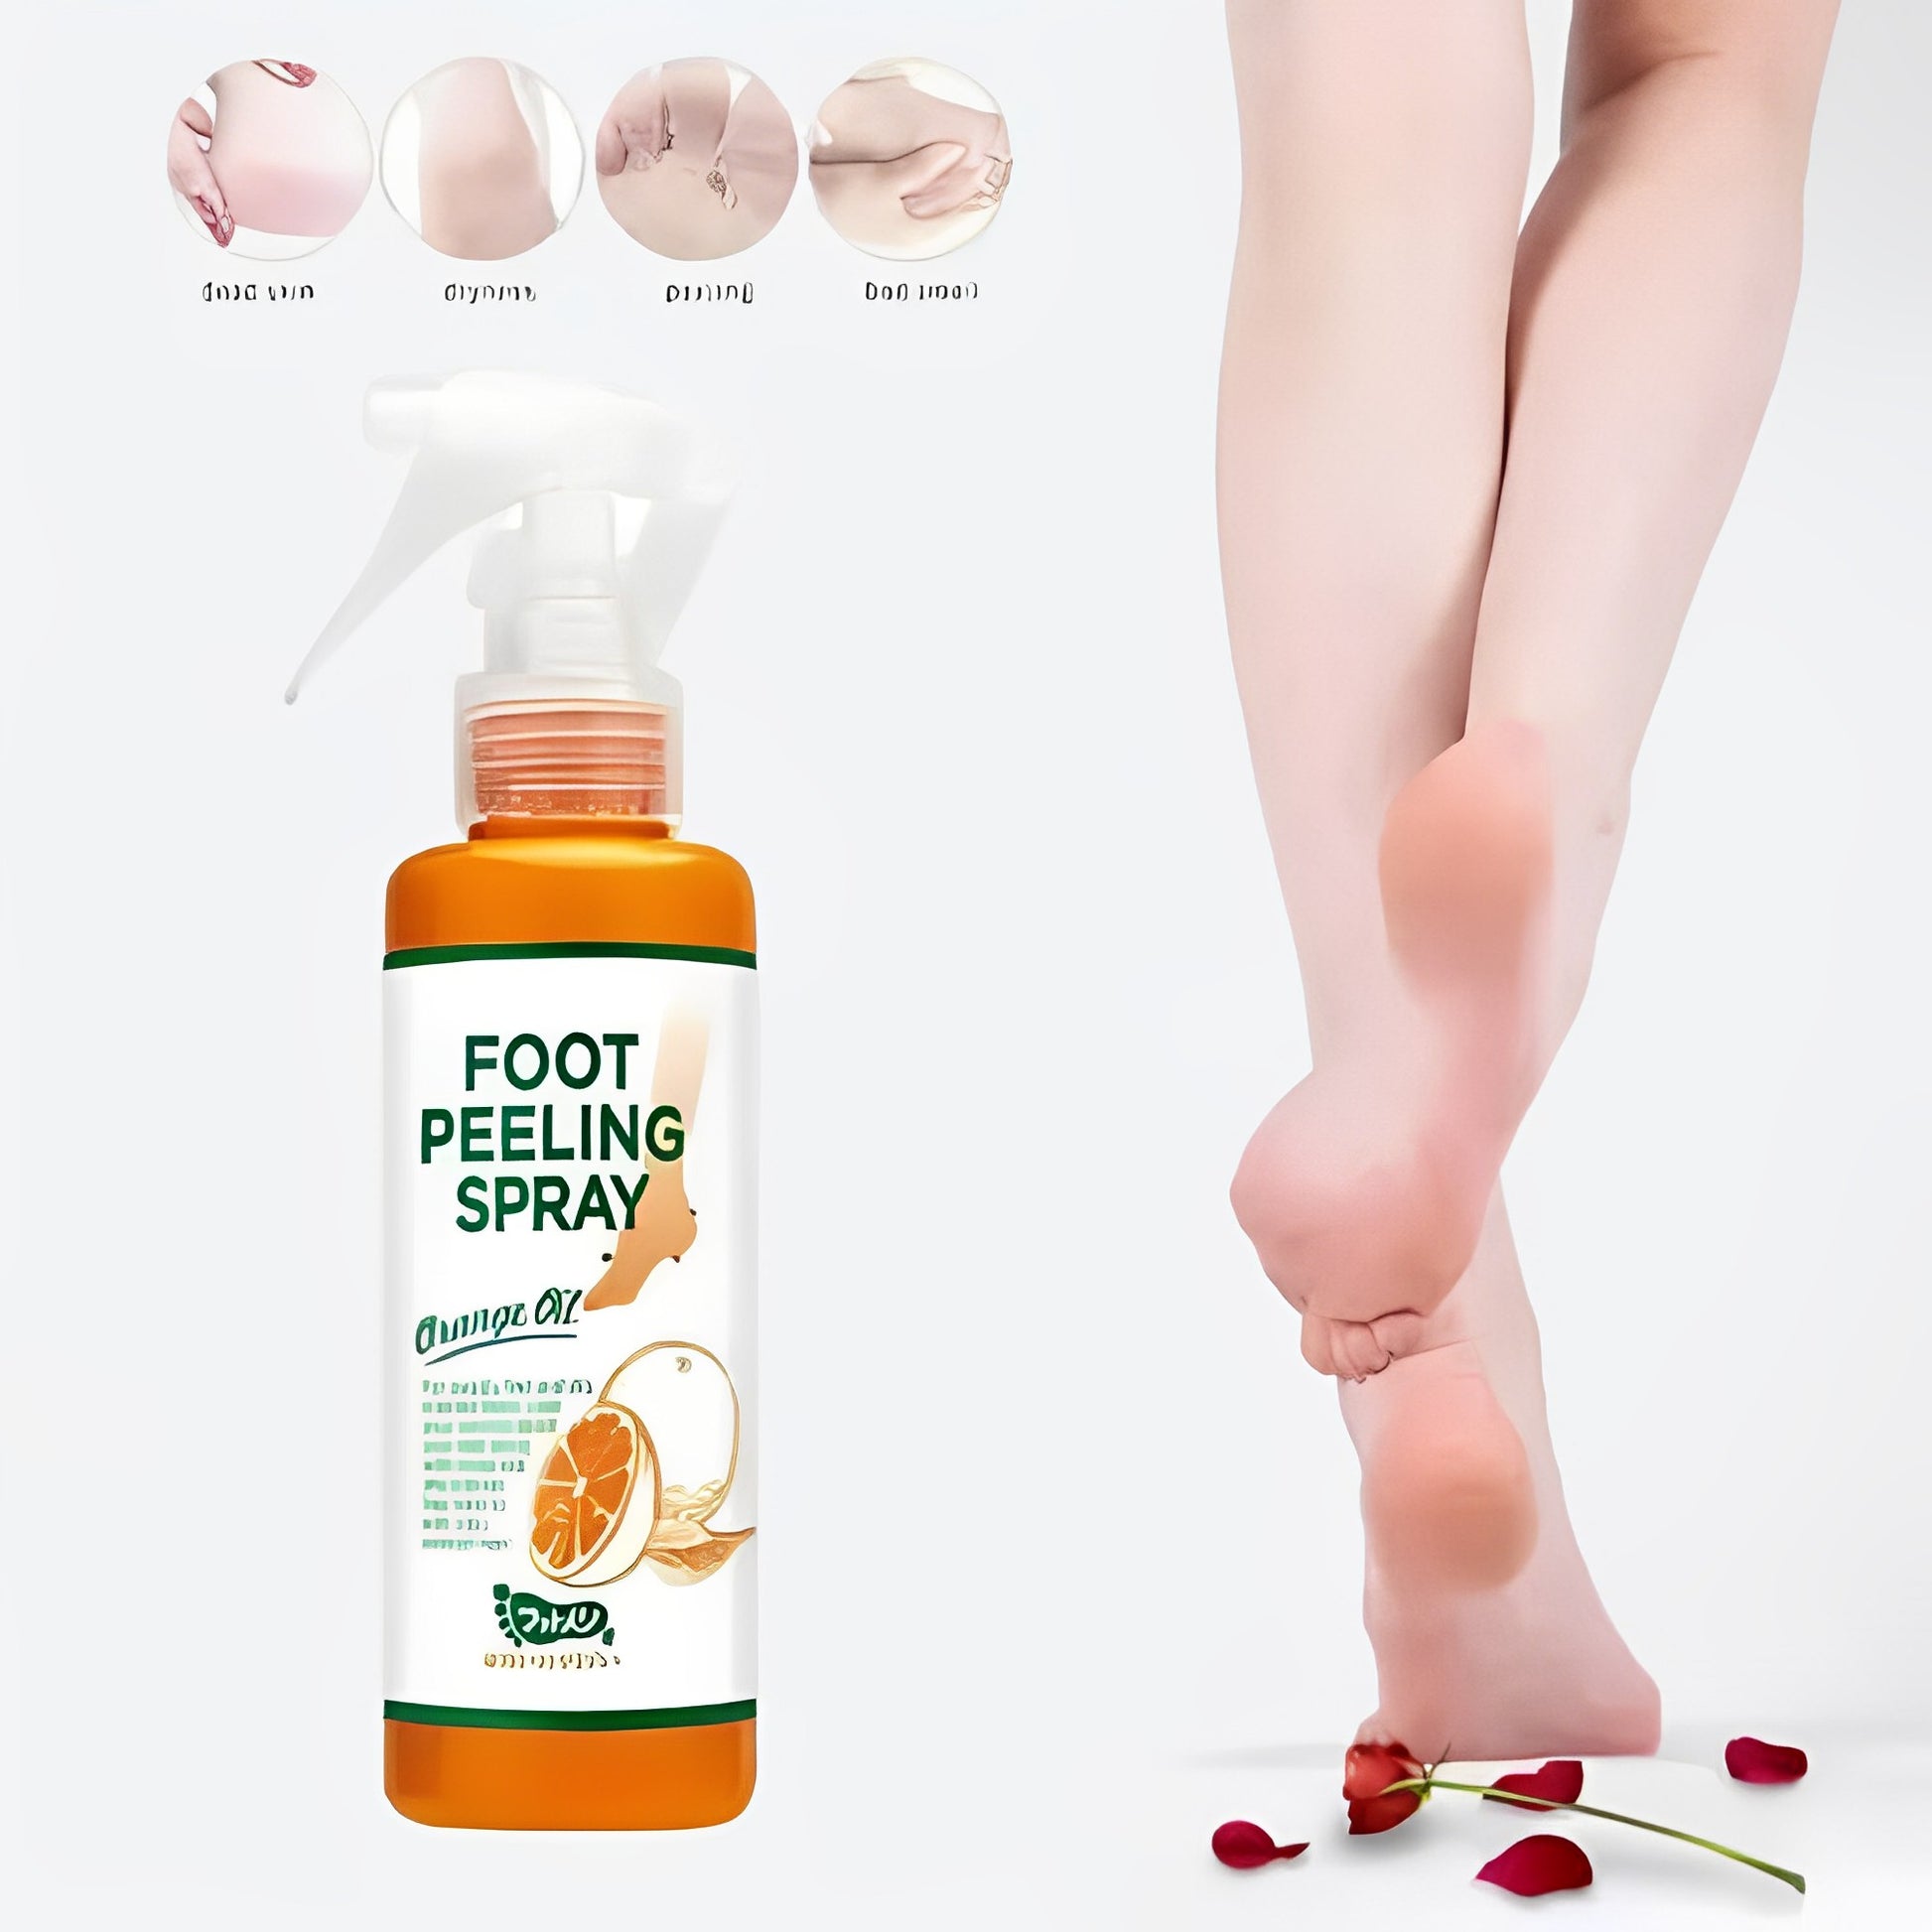 Foot Peeling Spray Benefits